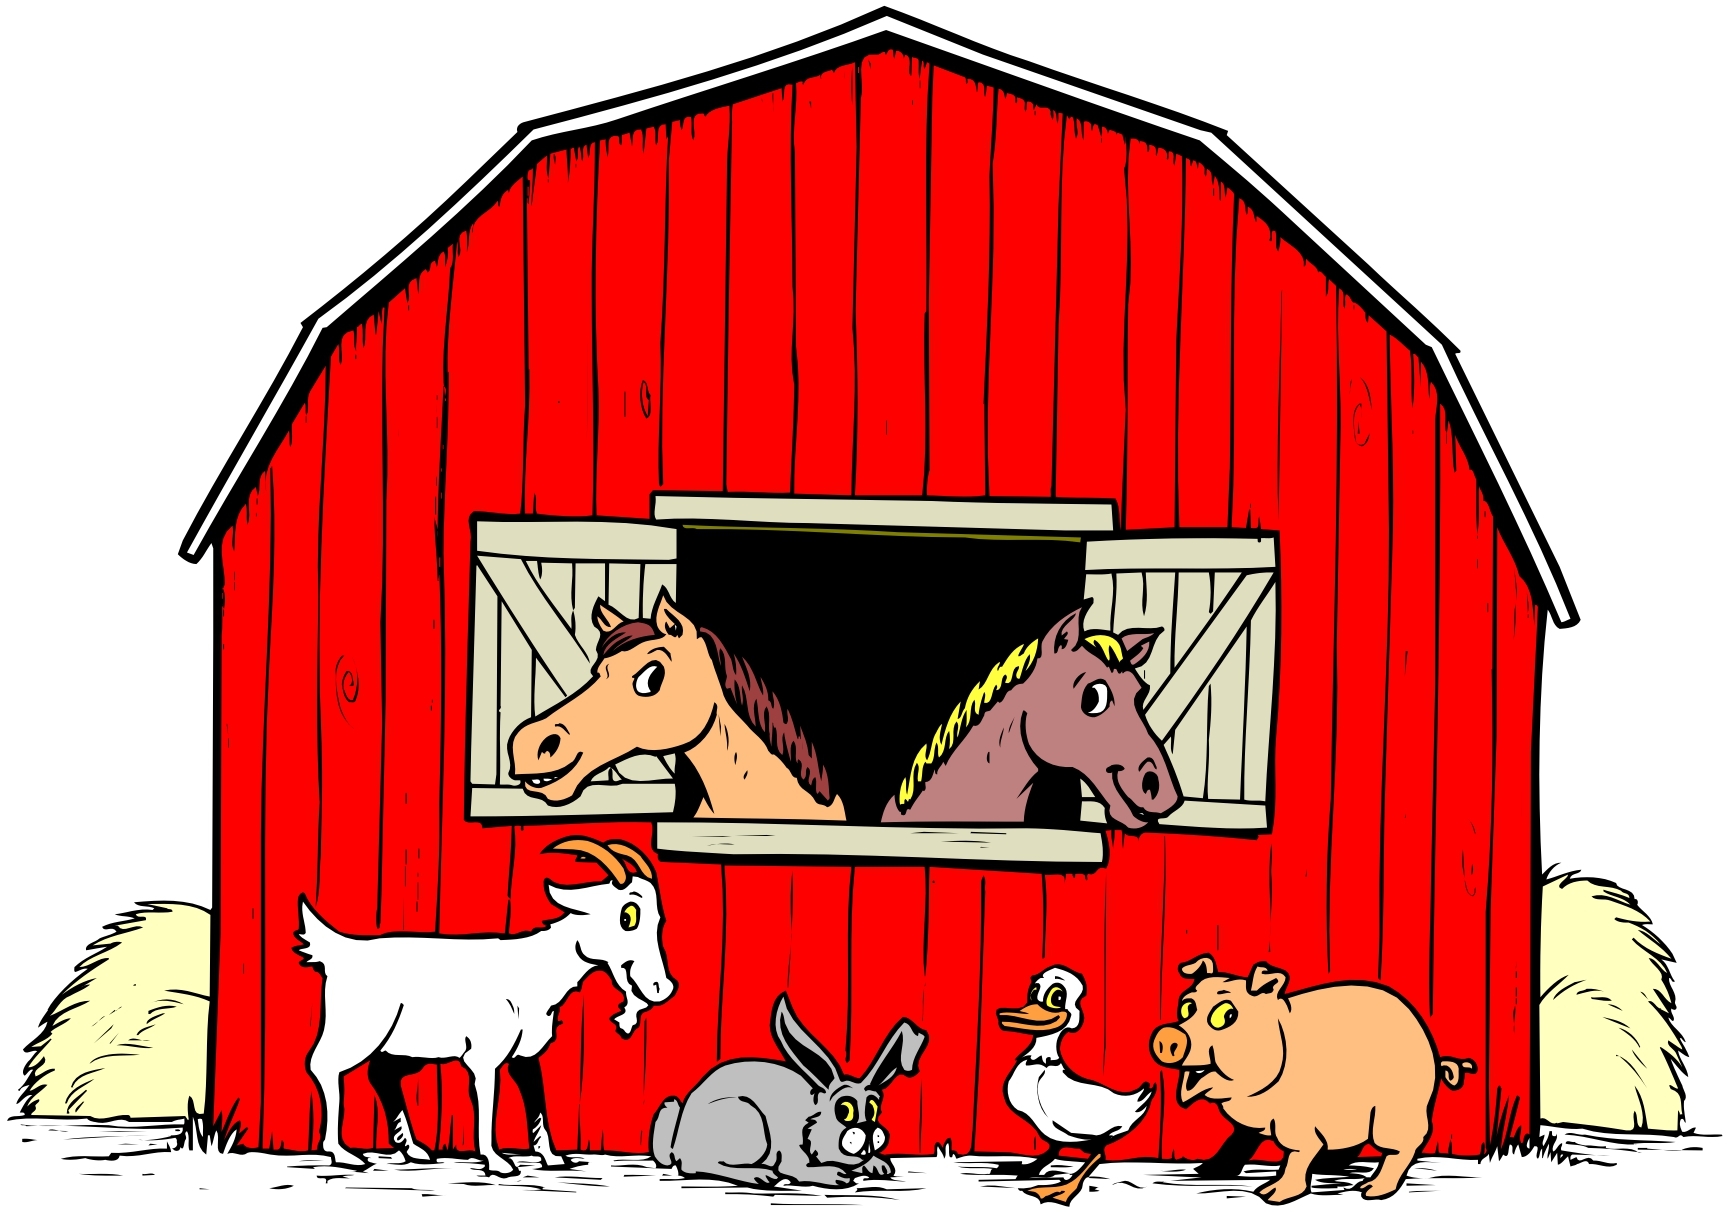 Farm Animals Cartoon Clipart